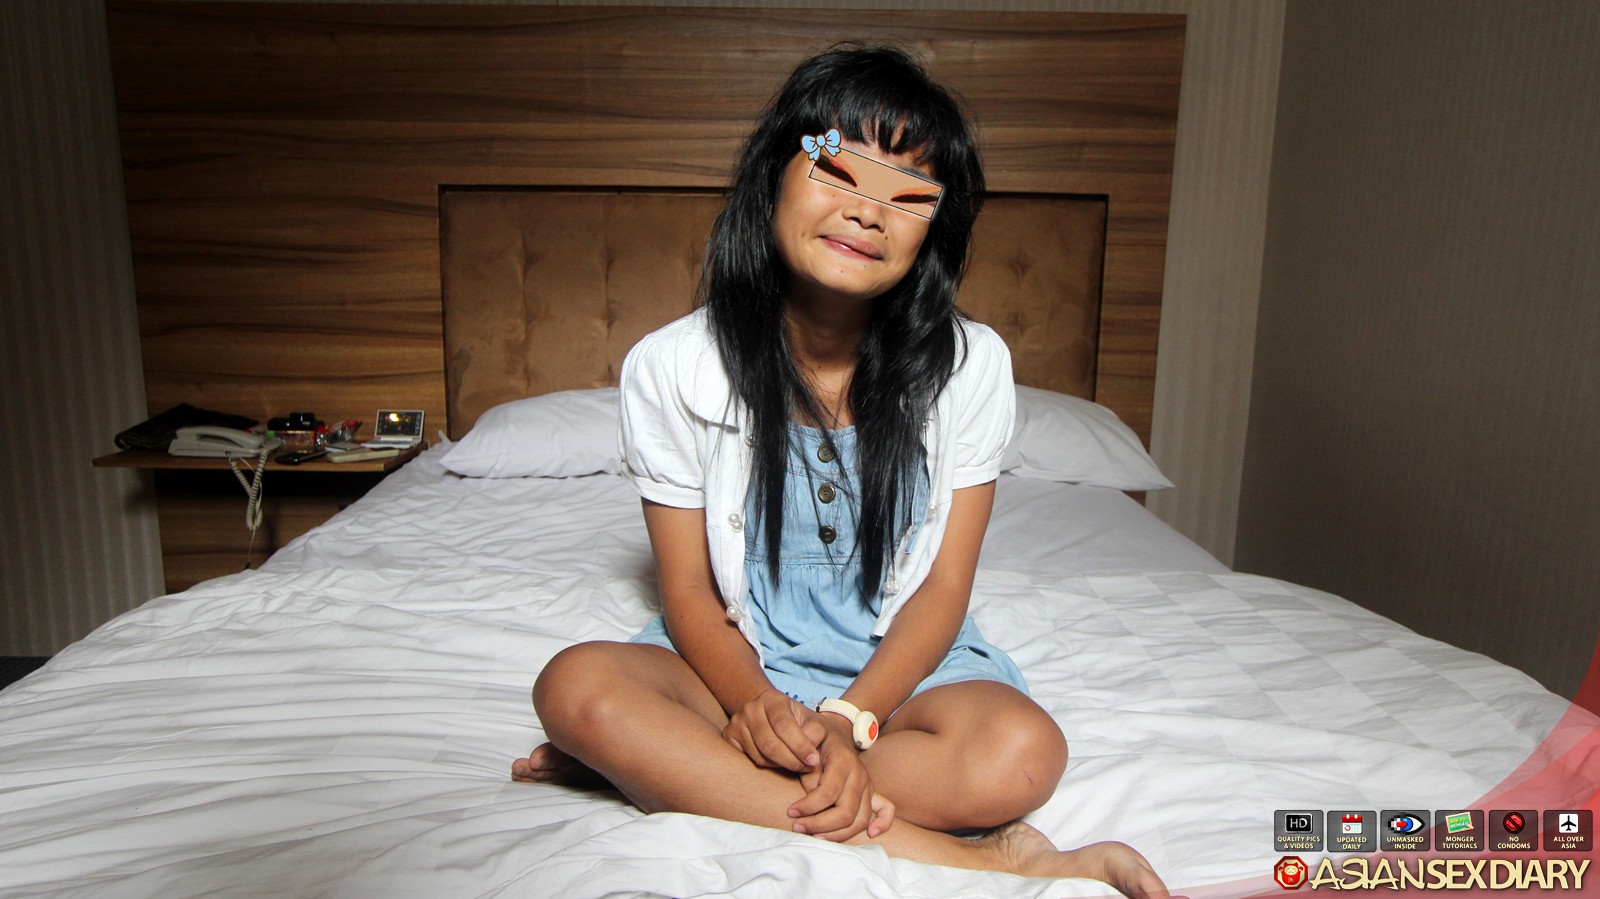 Petite Asian Innocent - Hairy petite Indonesian babe